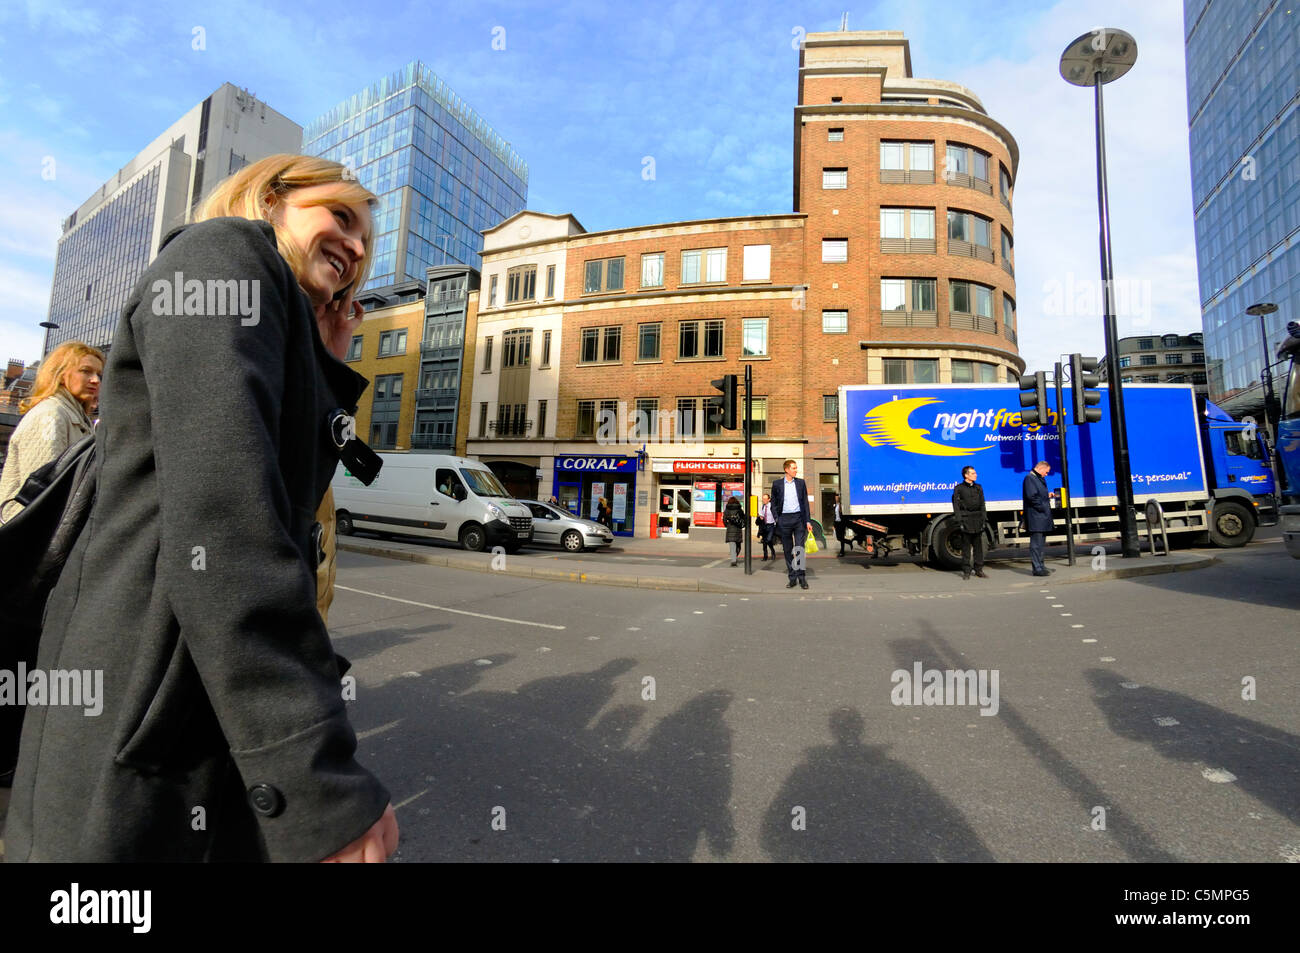 London, England, UK. Woman at pedestrian crossing Stock Photo